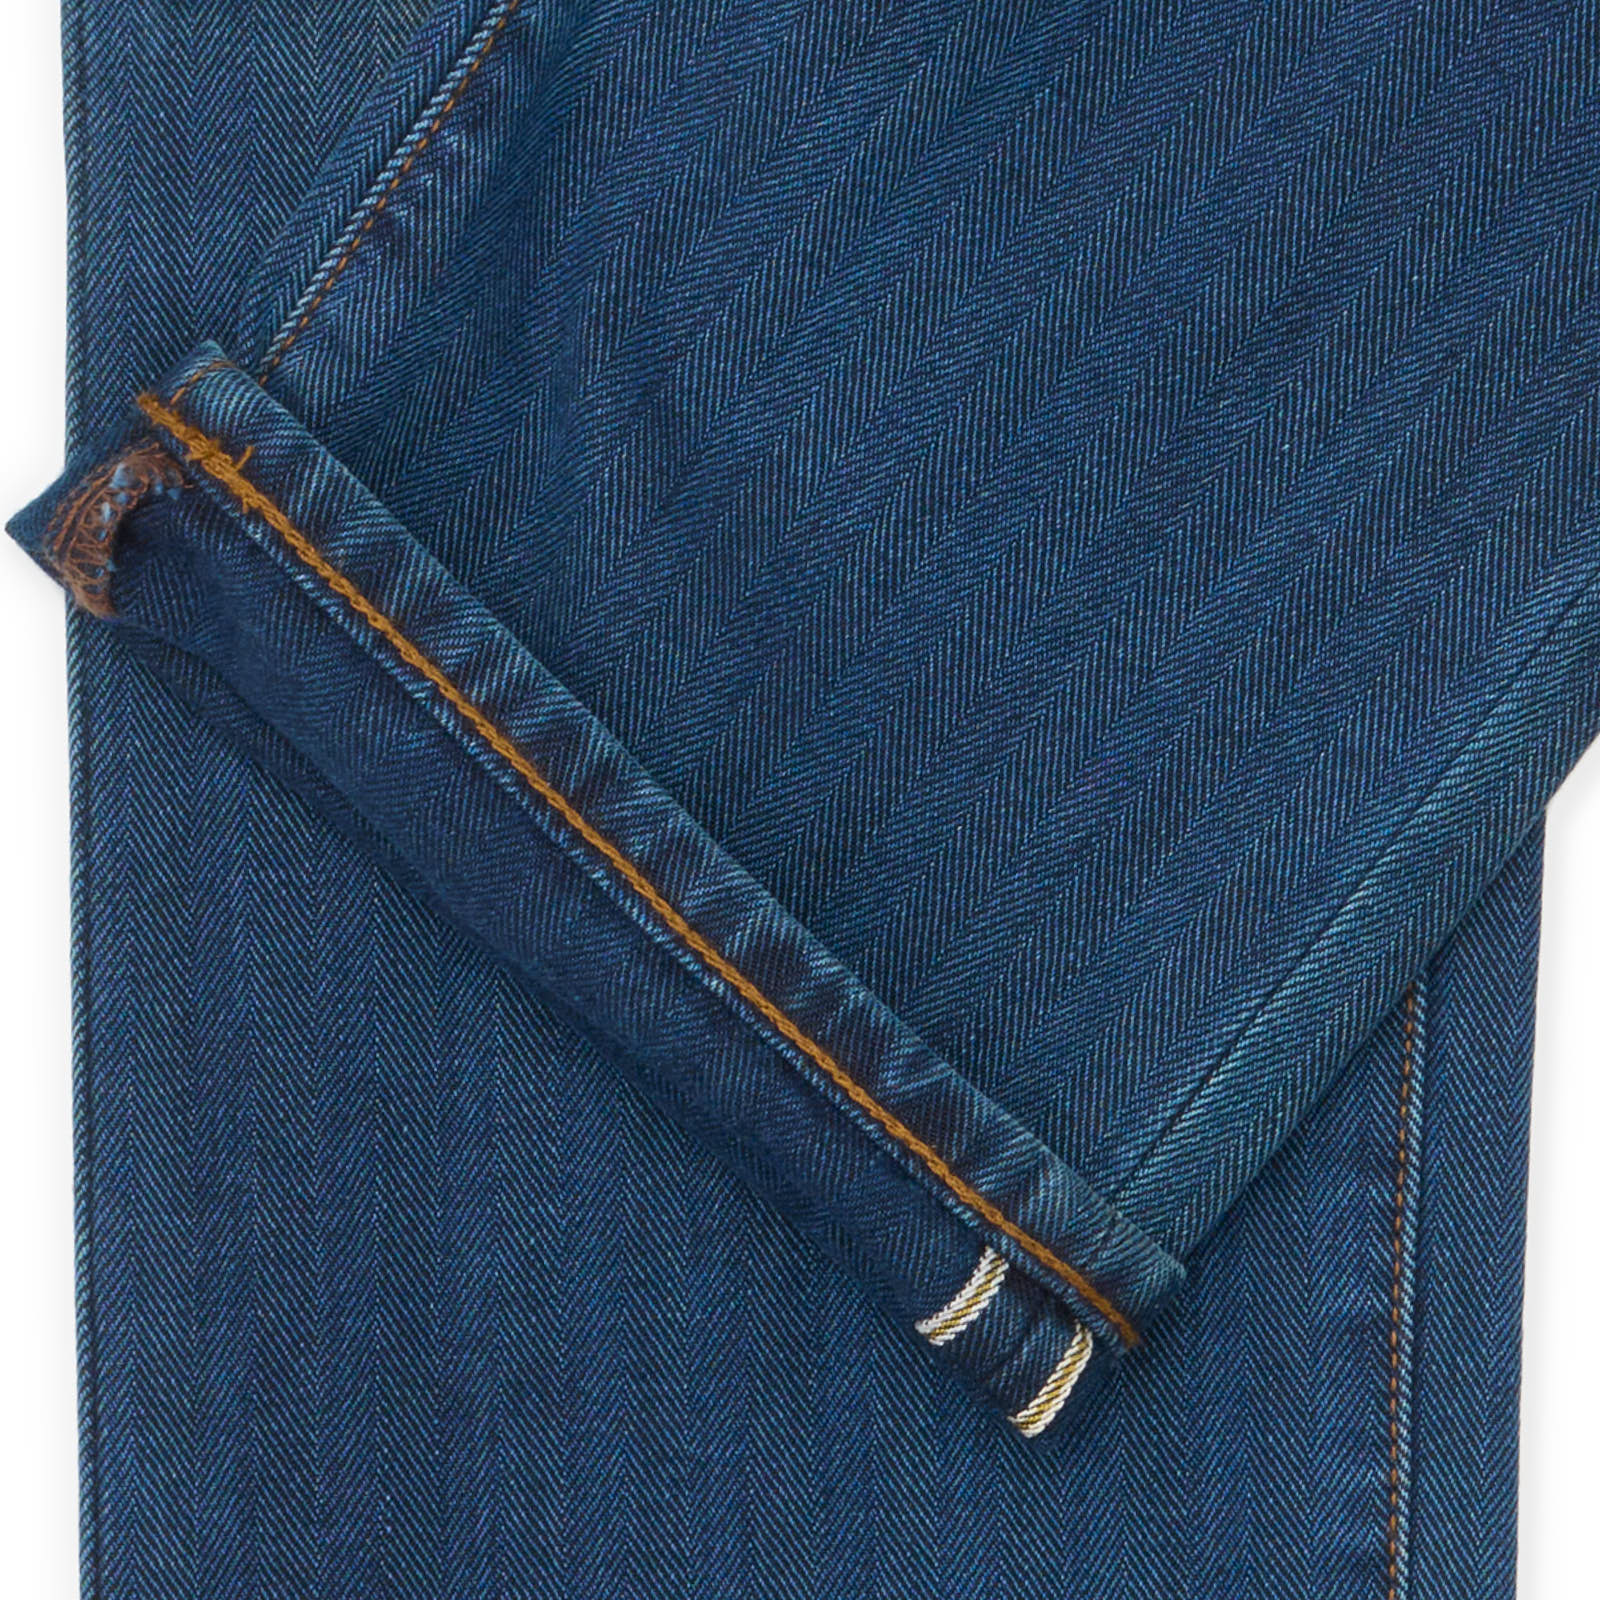 JACOB COHEN Handmade Limited Ed. of 495 Blue Herringbone Denim Jeans NEW US 30